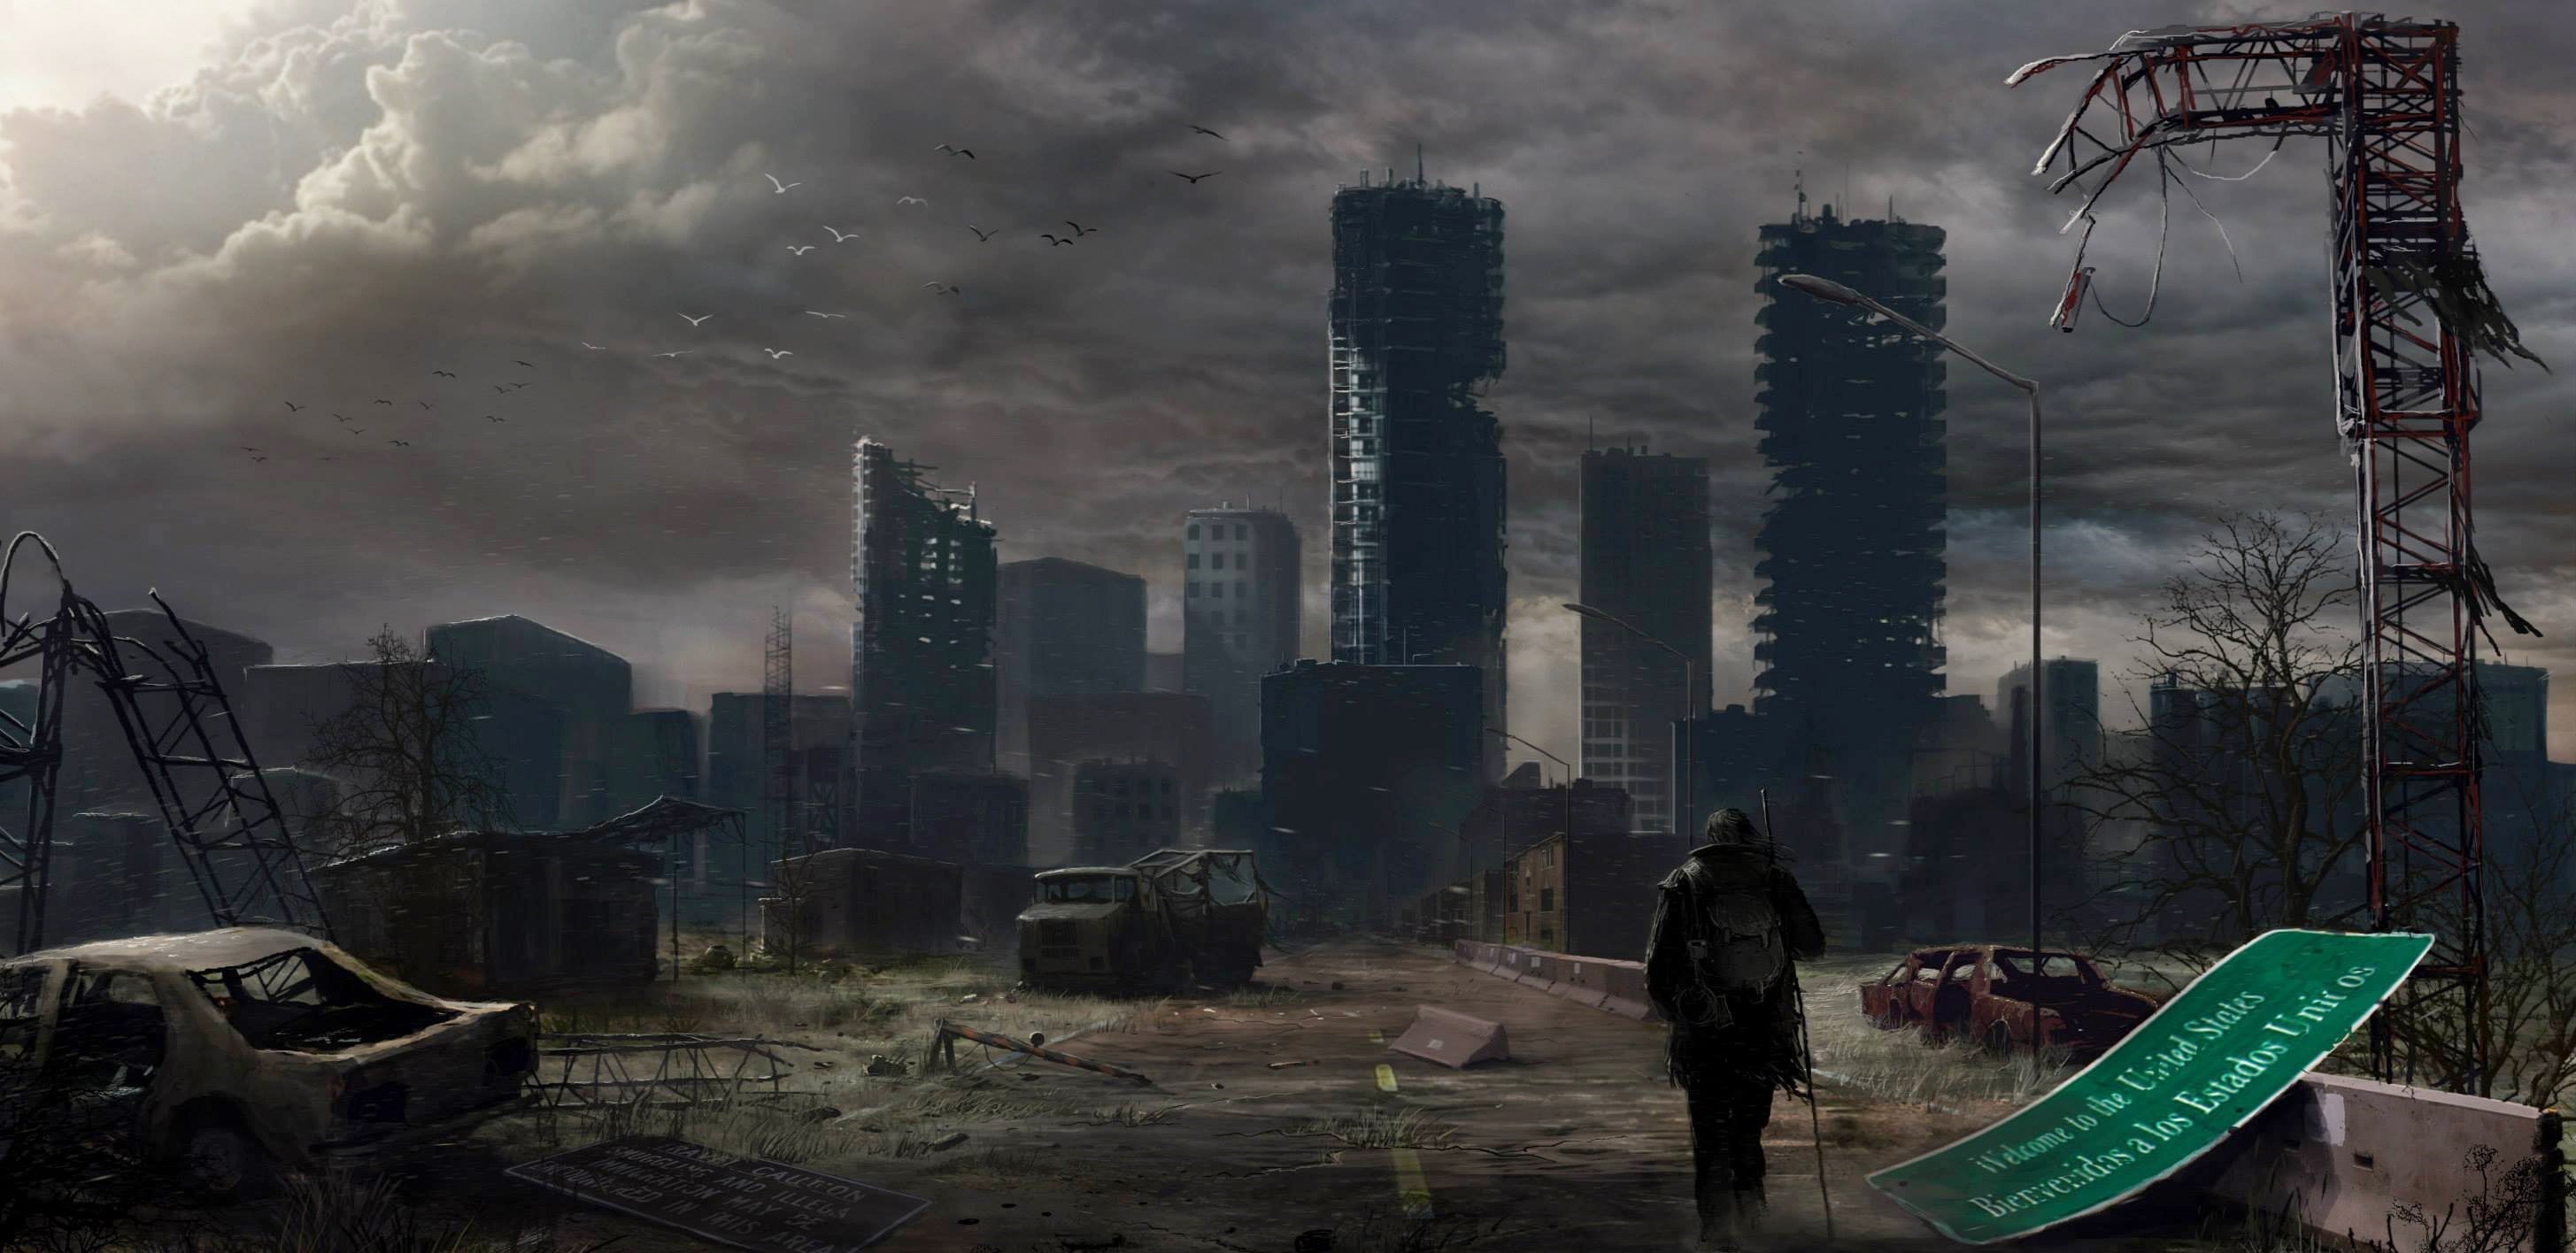 General 2910x1416 artwork apocalyptic sky digital art futuristic cityscape ruins wreck car vehicle birds men